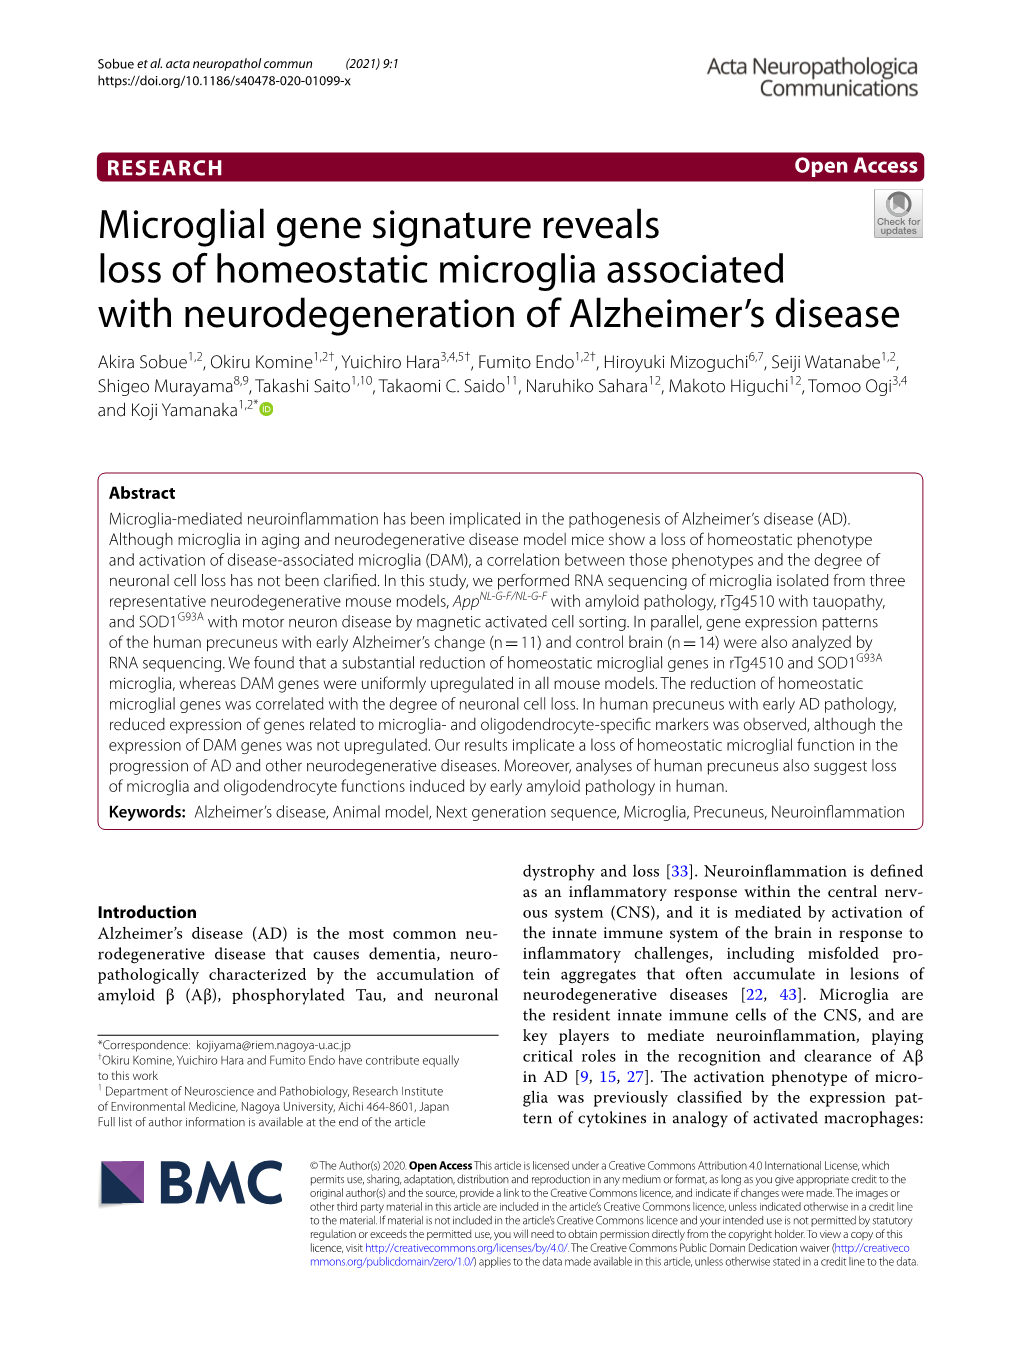 Microglial Gene Signature Reveals Loss of Homeostatic Microglia Associated